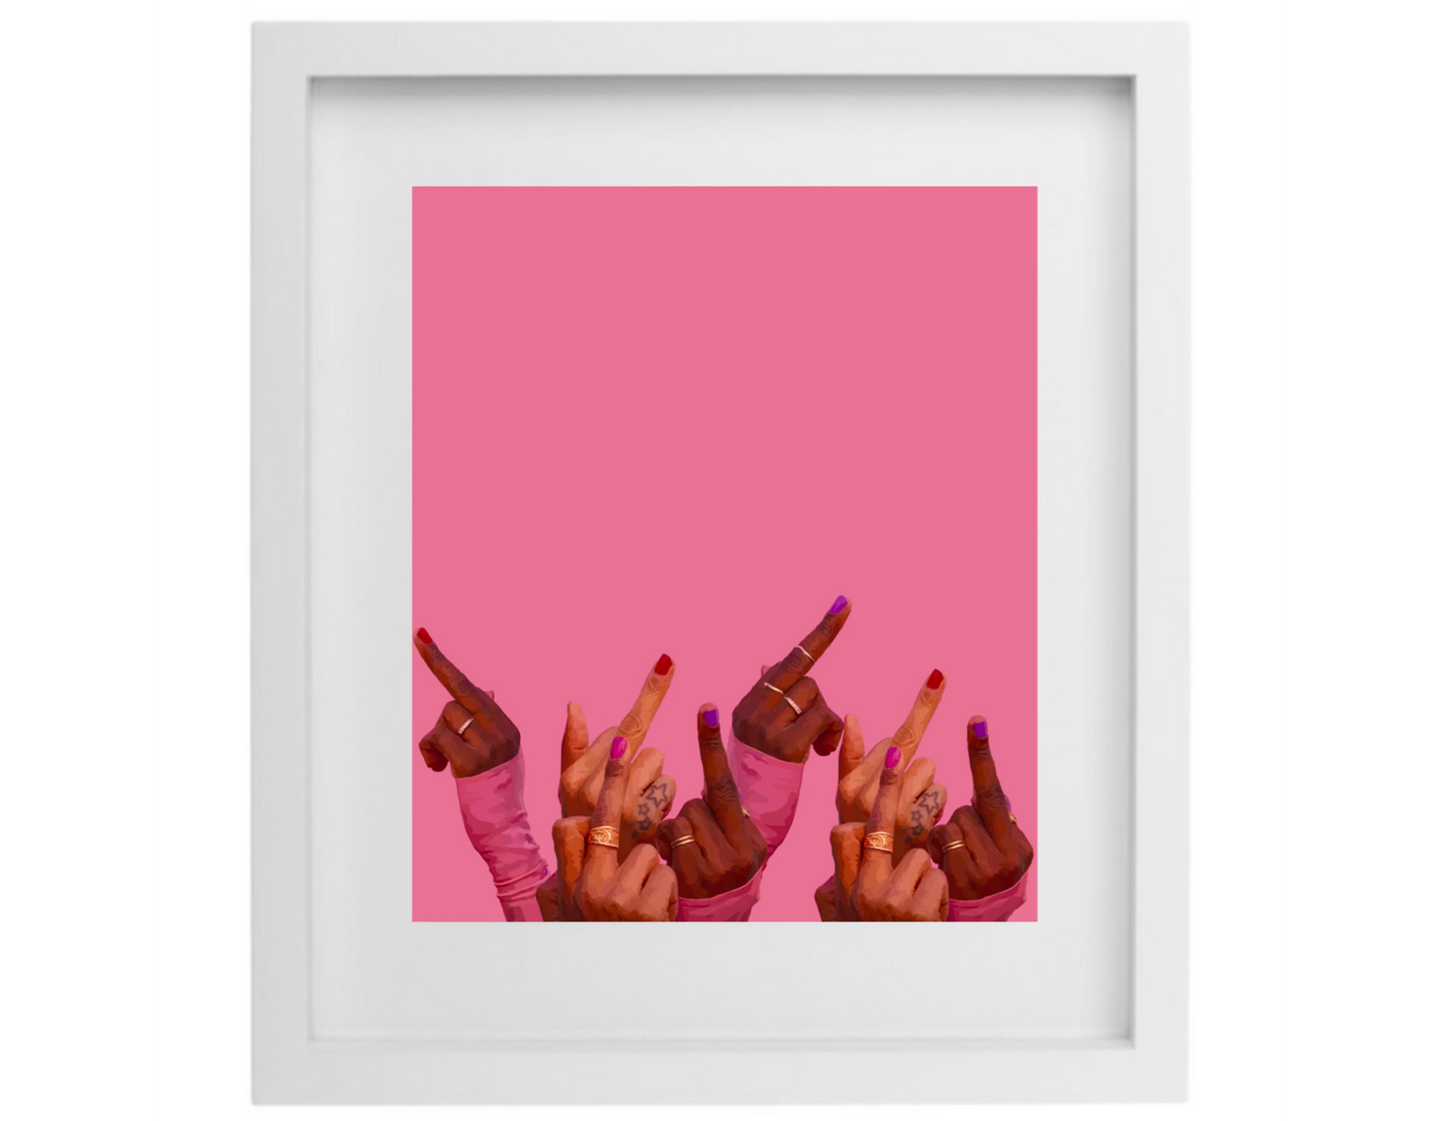 Pink middle finger artwork in a white frame